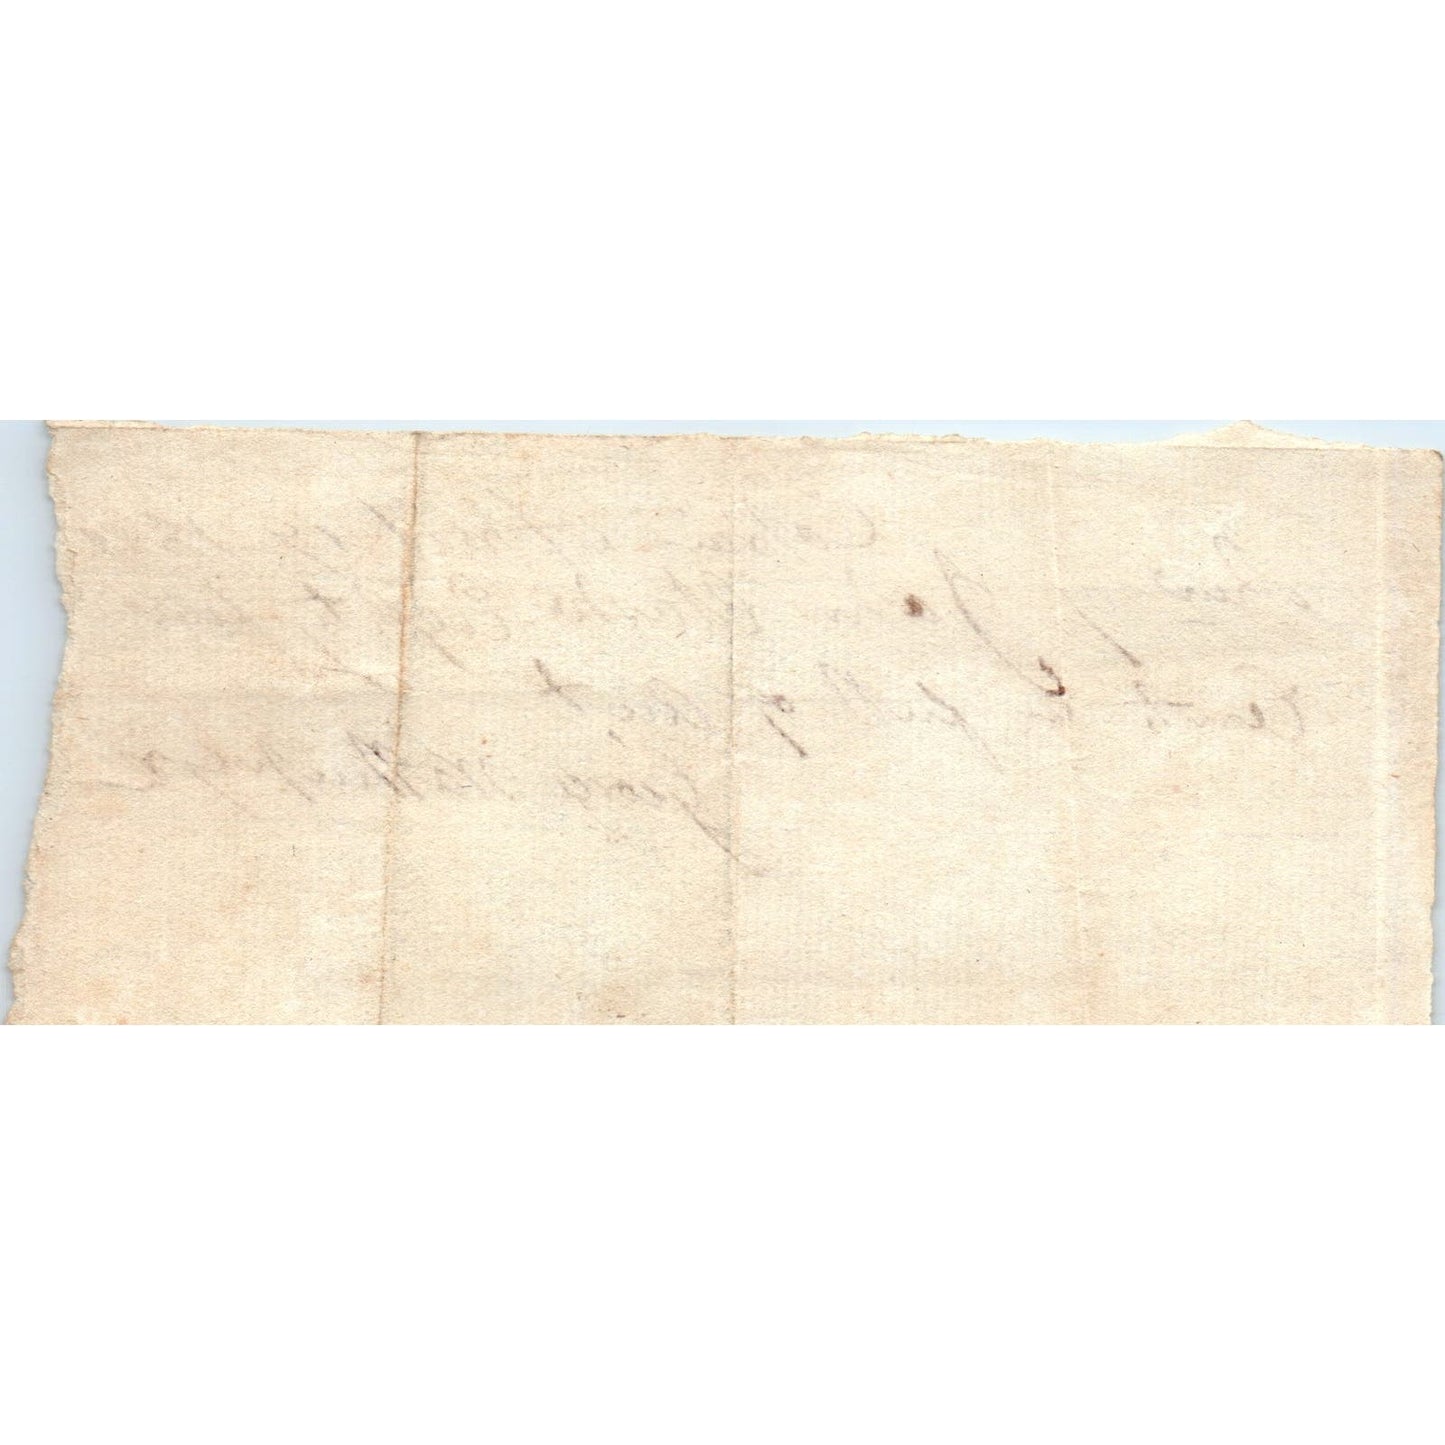 1822 Handwritten Receipt Colrain Massachusetts John Clark AE6-013